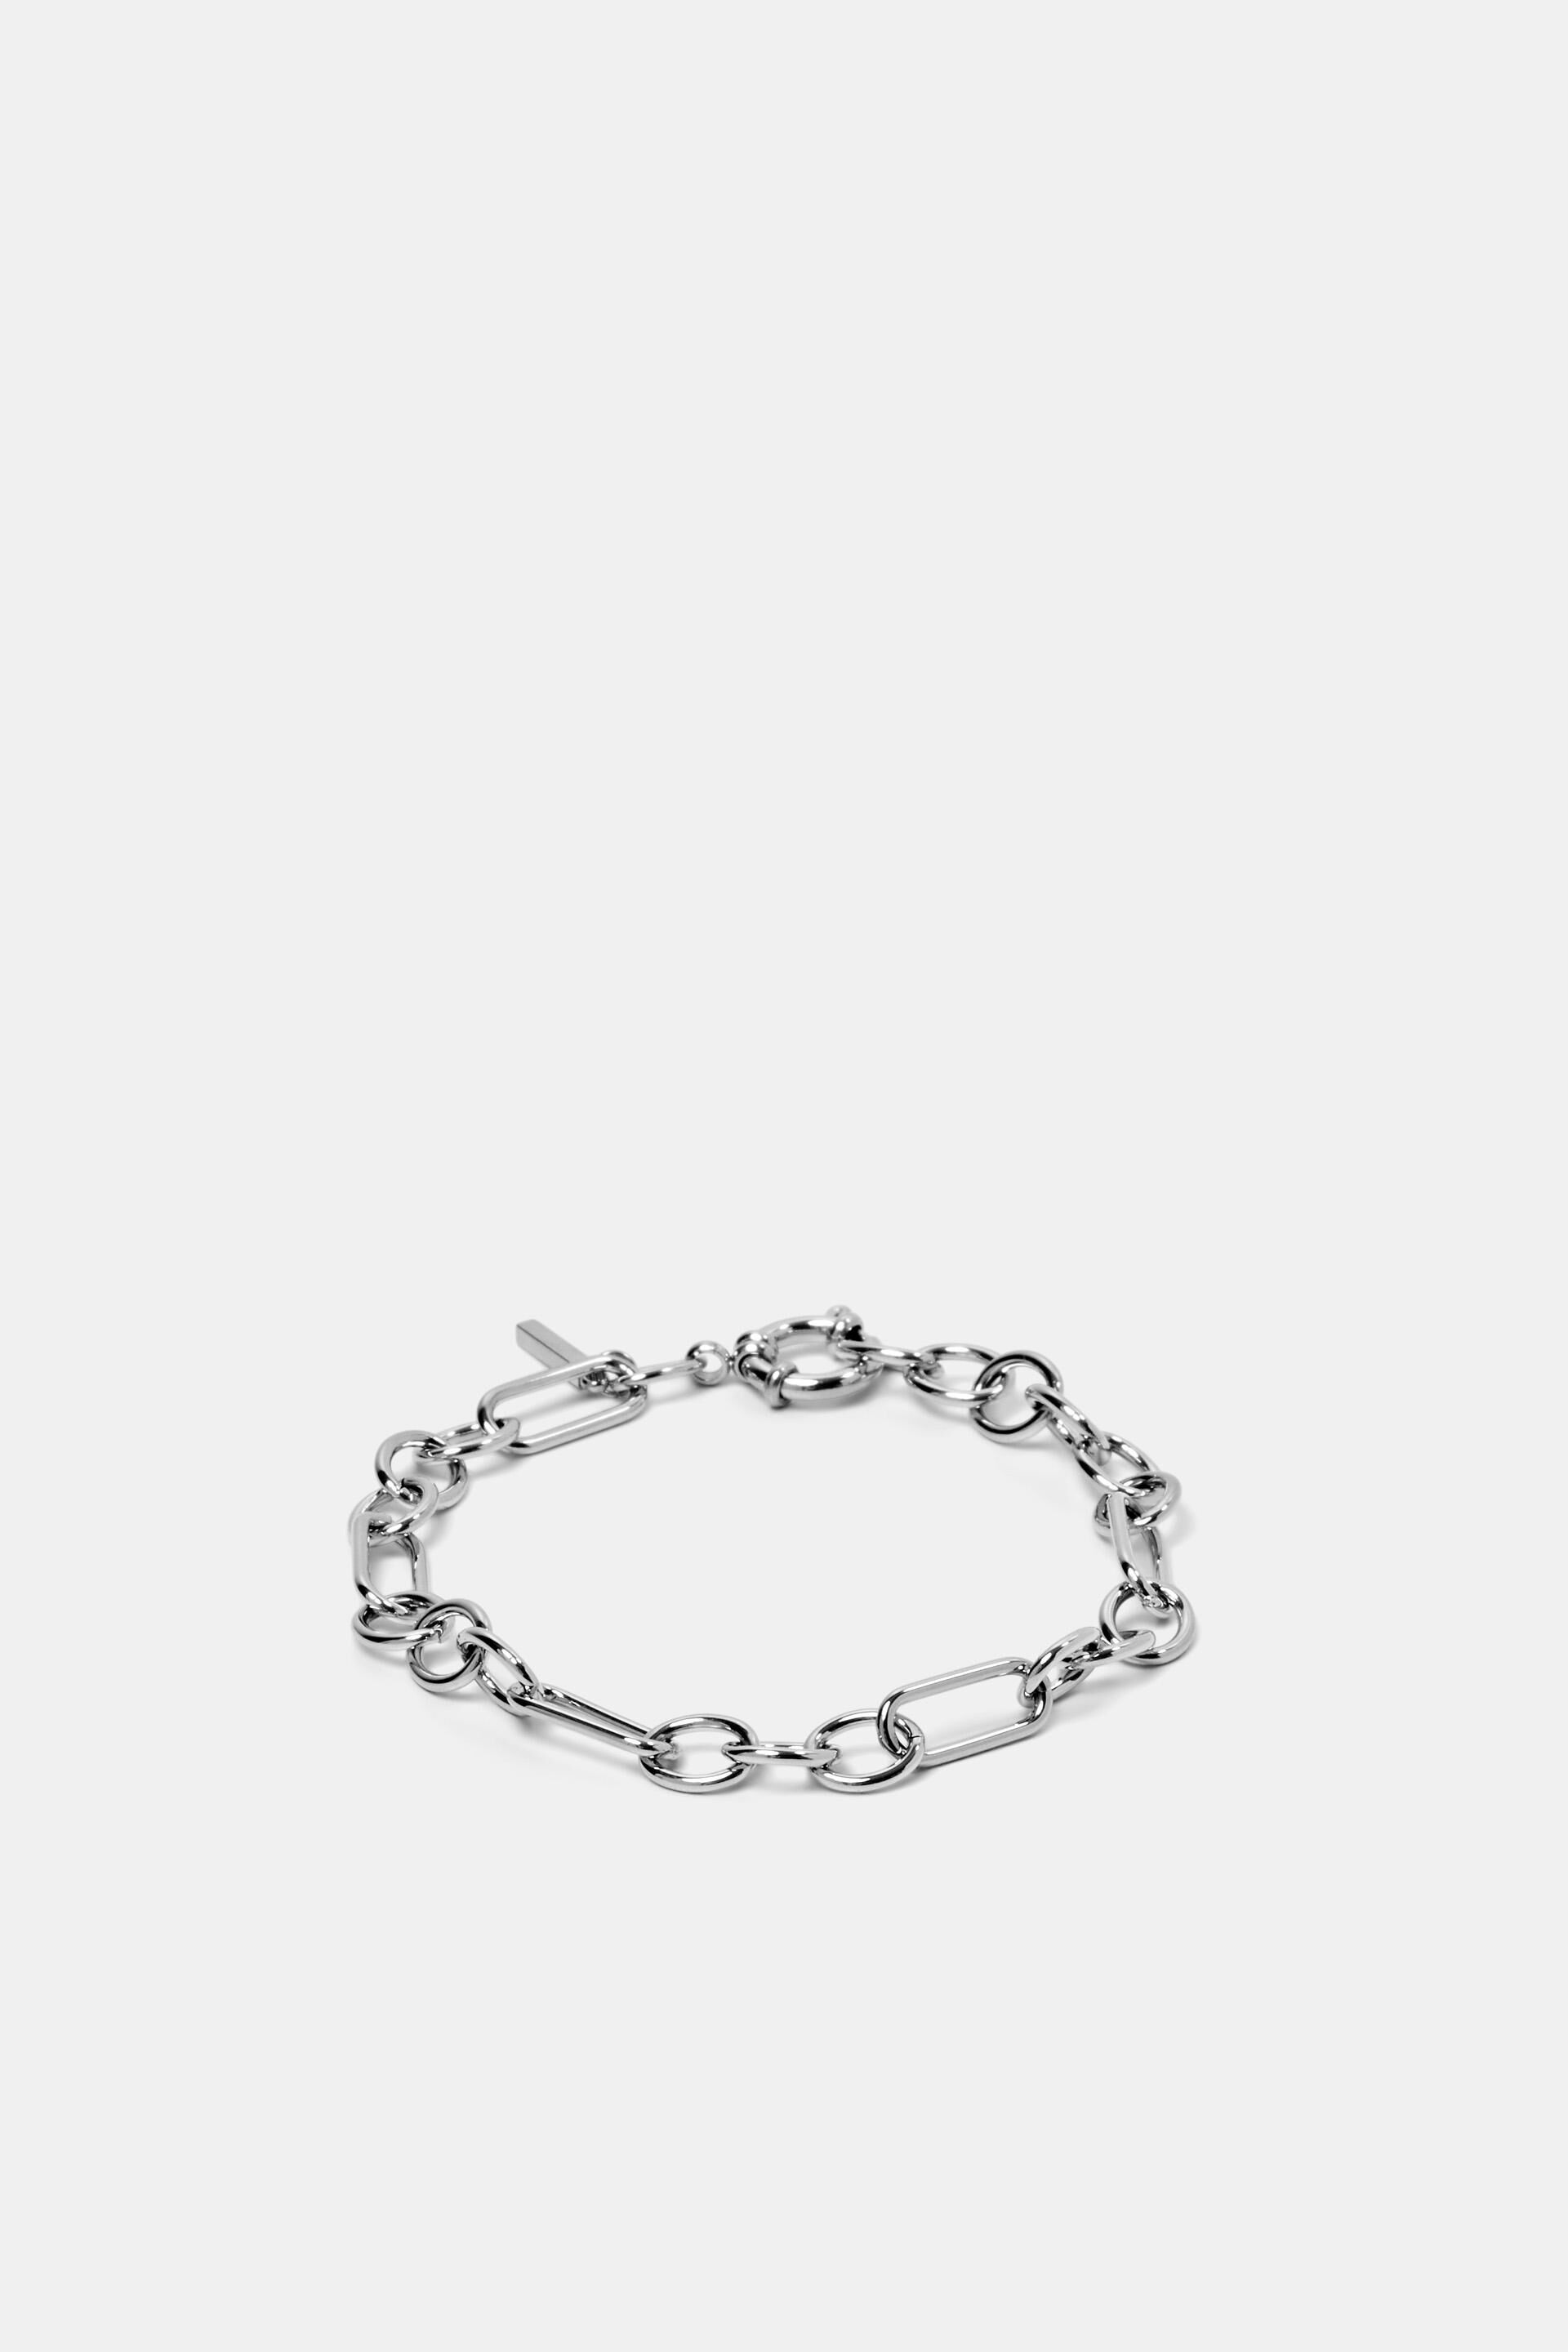 Esprit bracelet, stainless steel Link